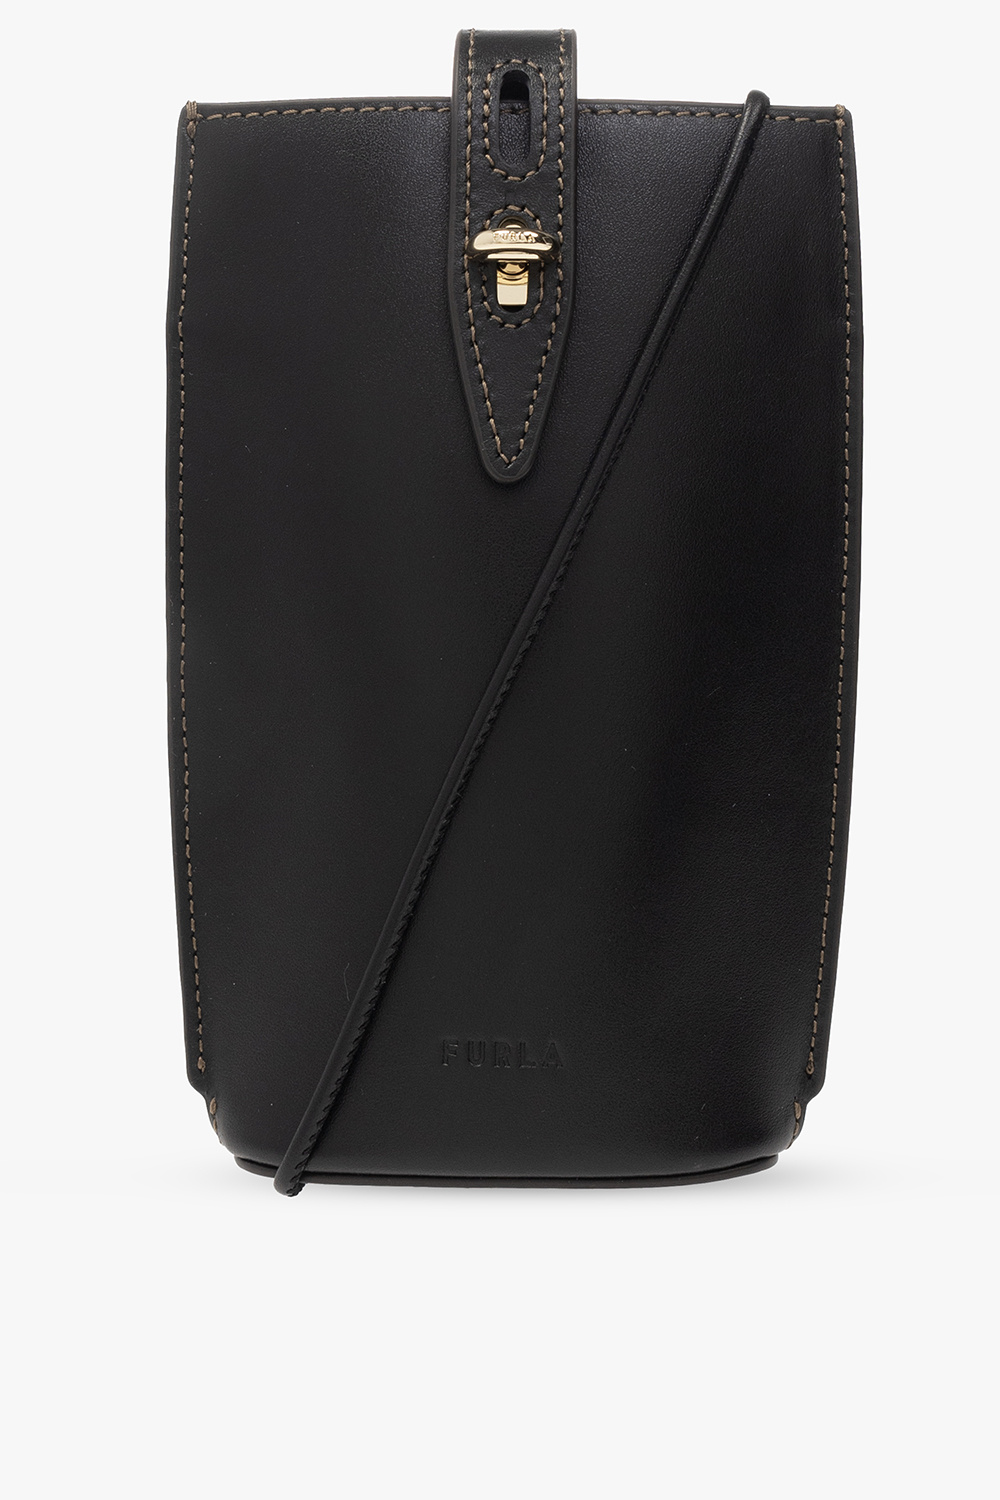 Furla ‘Unica Mini’ strapped leather phone holder